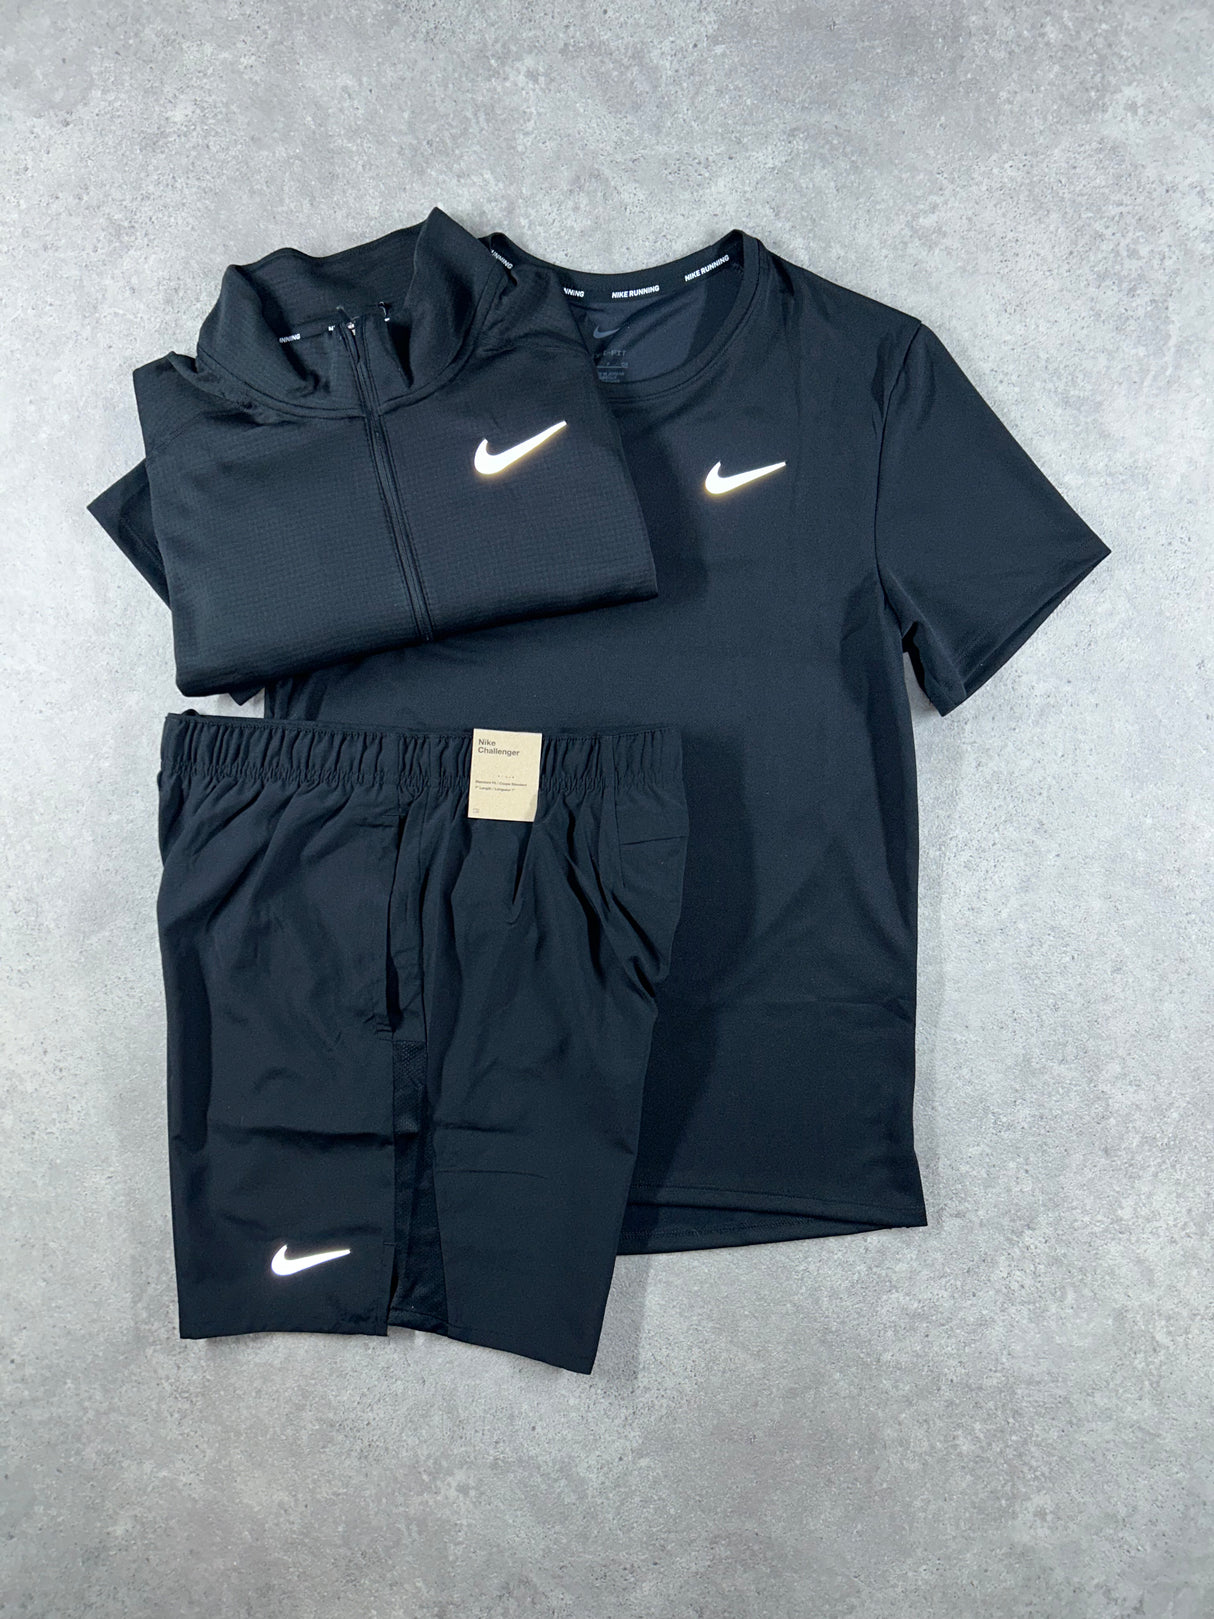 Nike - Essential Set - Black